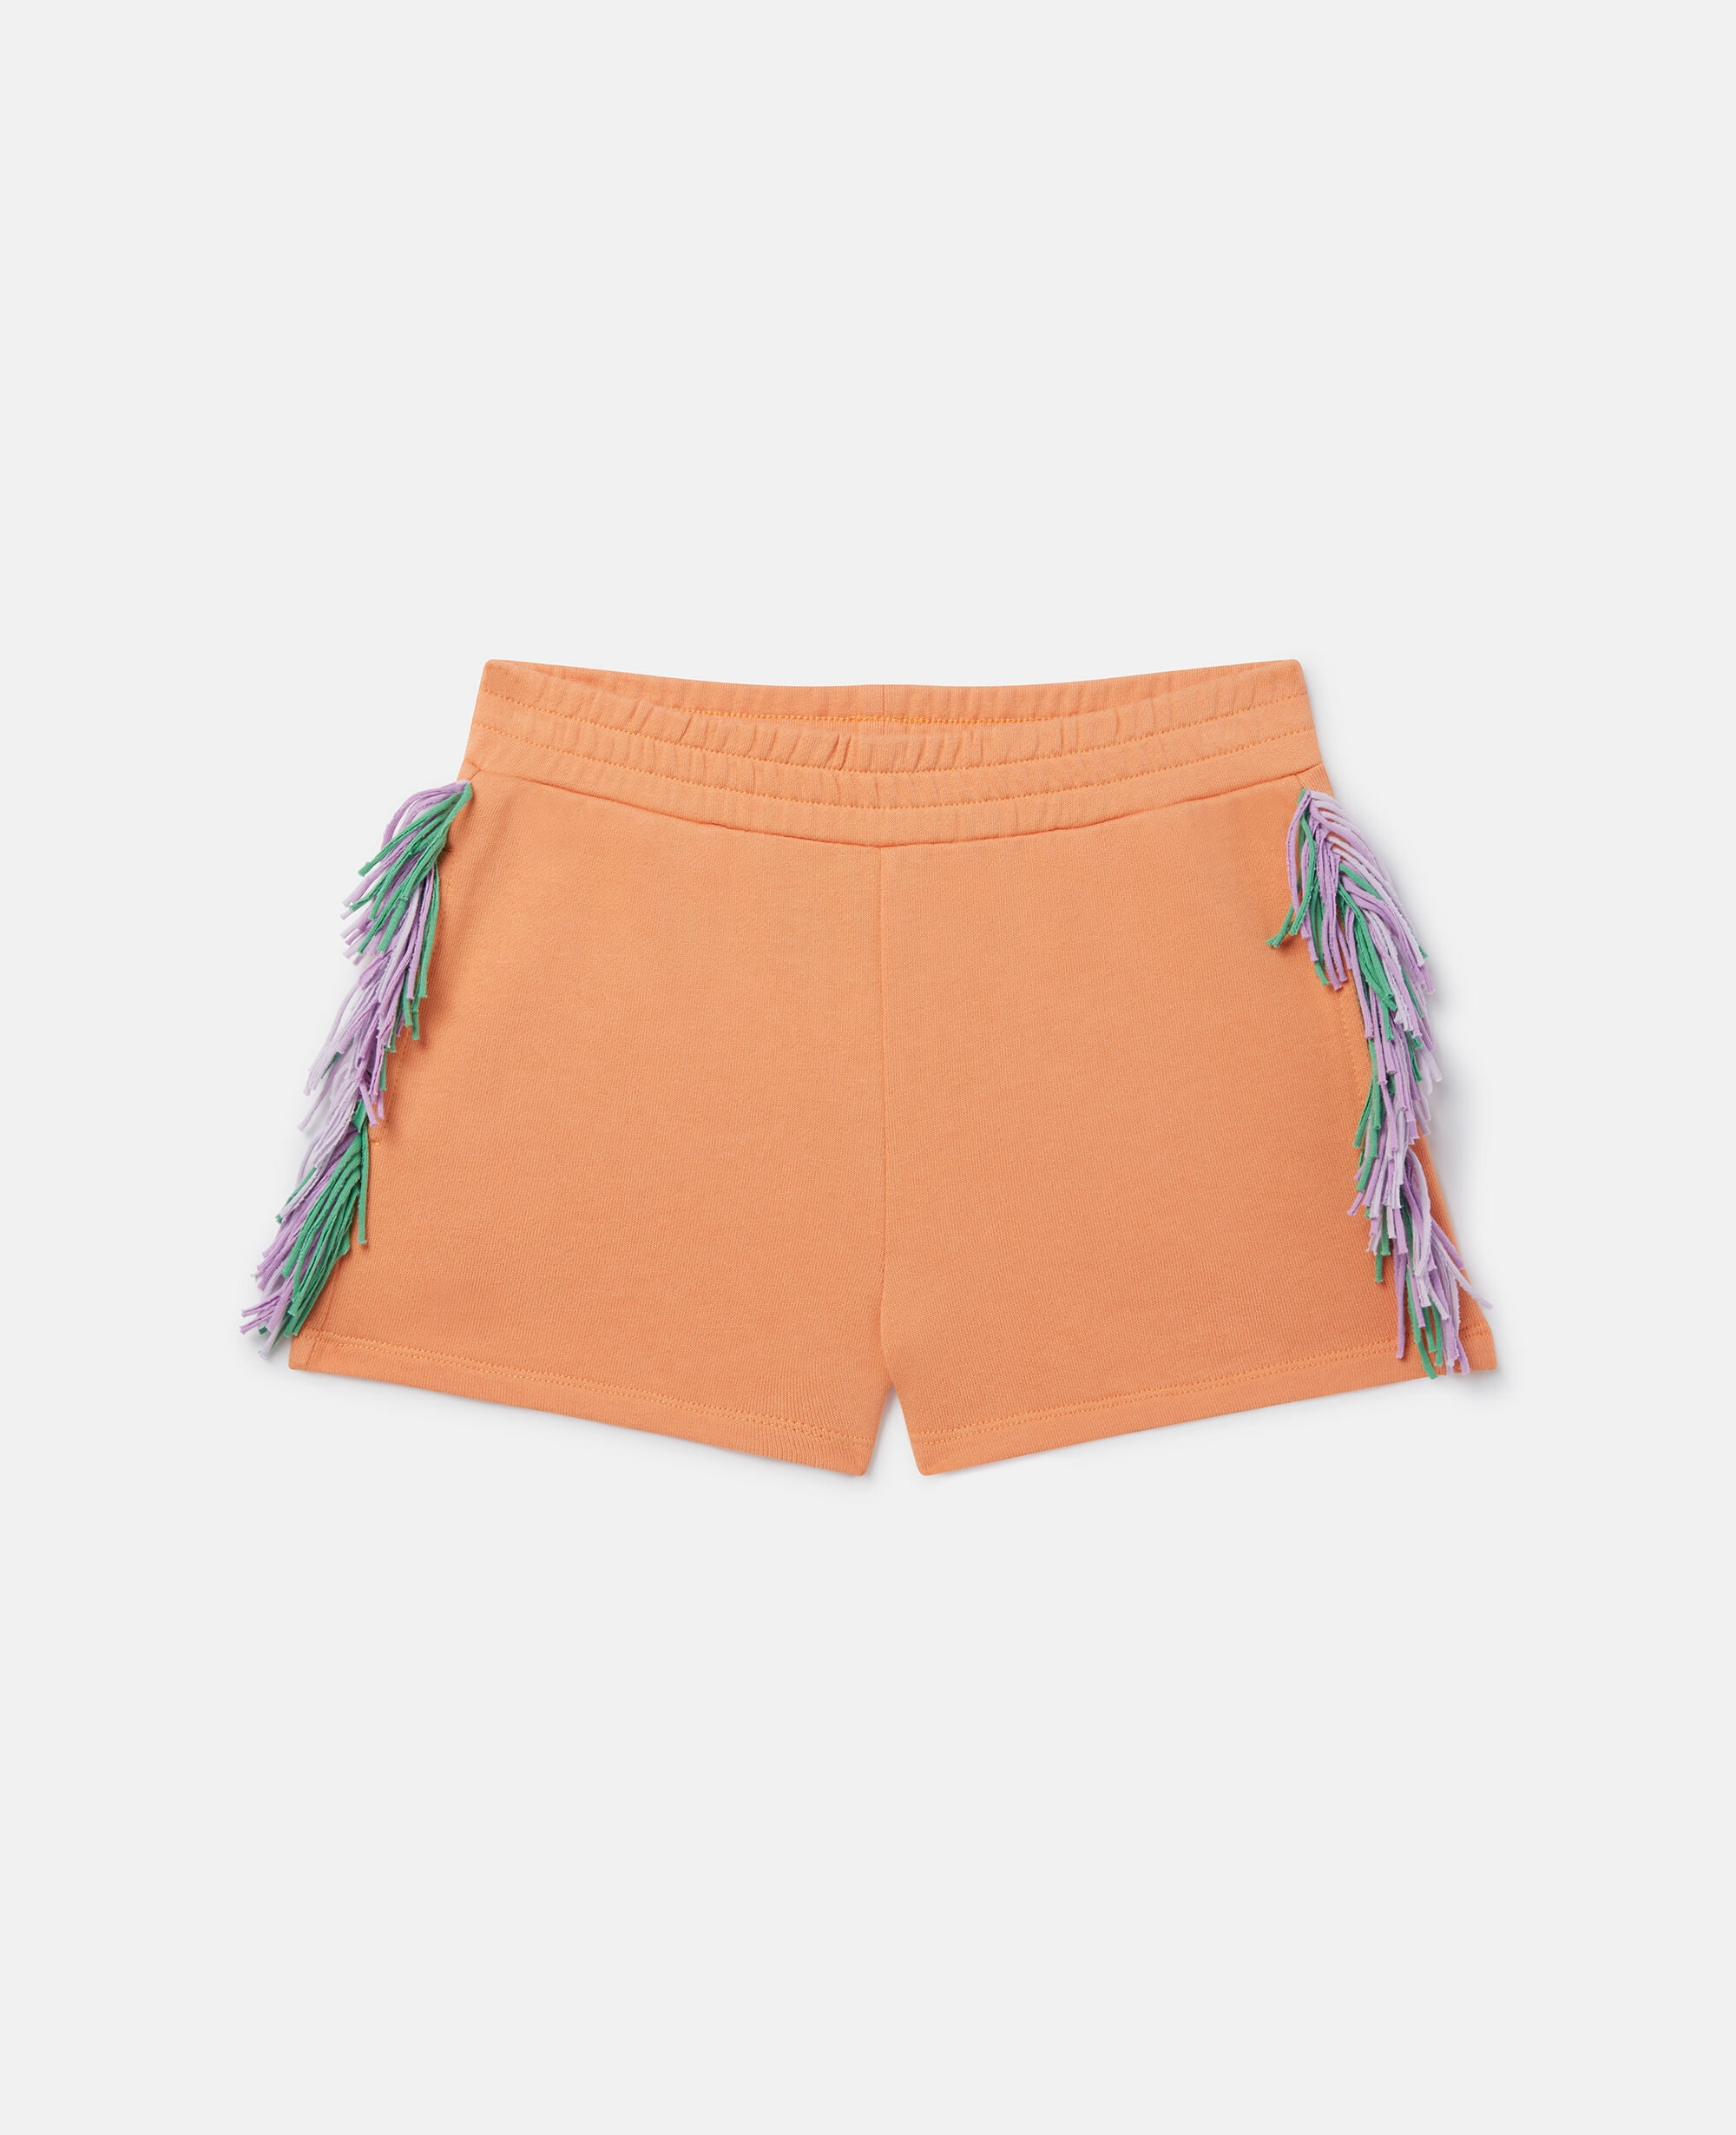 Sweet Girls Denim Short Pants Rompers Suspender Trousers Loose Jeans Shorts  Cute | eBay